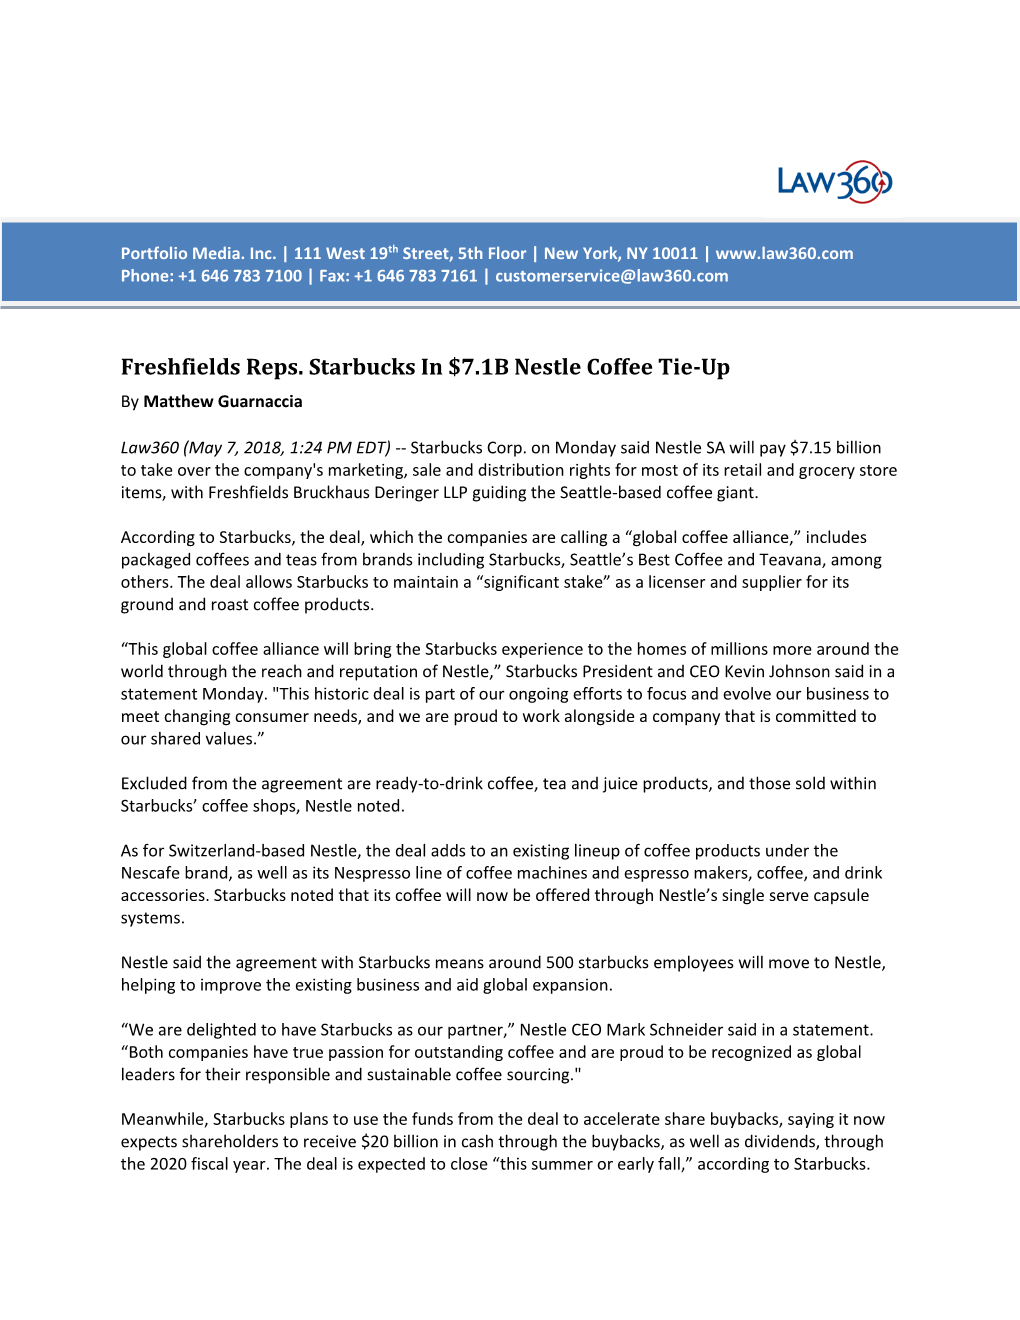 Freshfields Reps. Starbucks in $7.1B Nestle Coffee Tie-Up by Matthew Guarnaccia